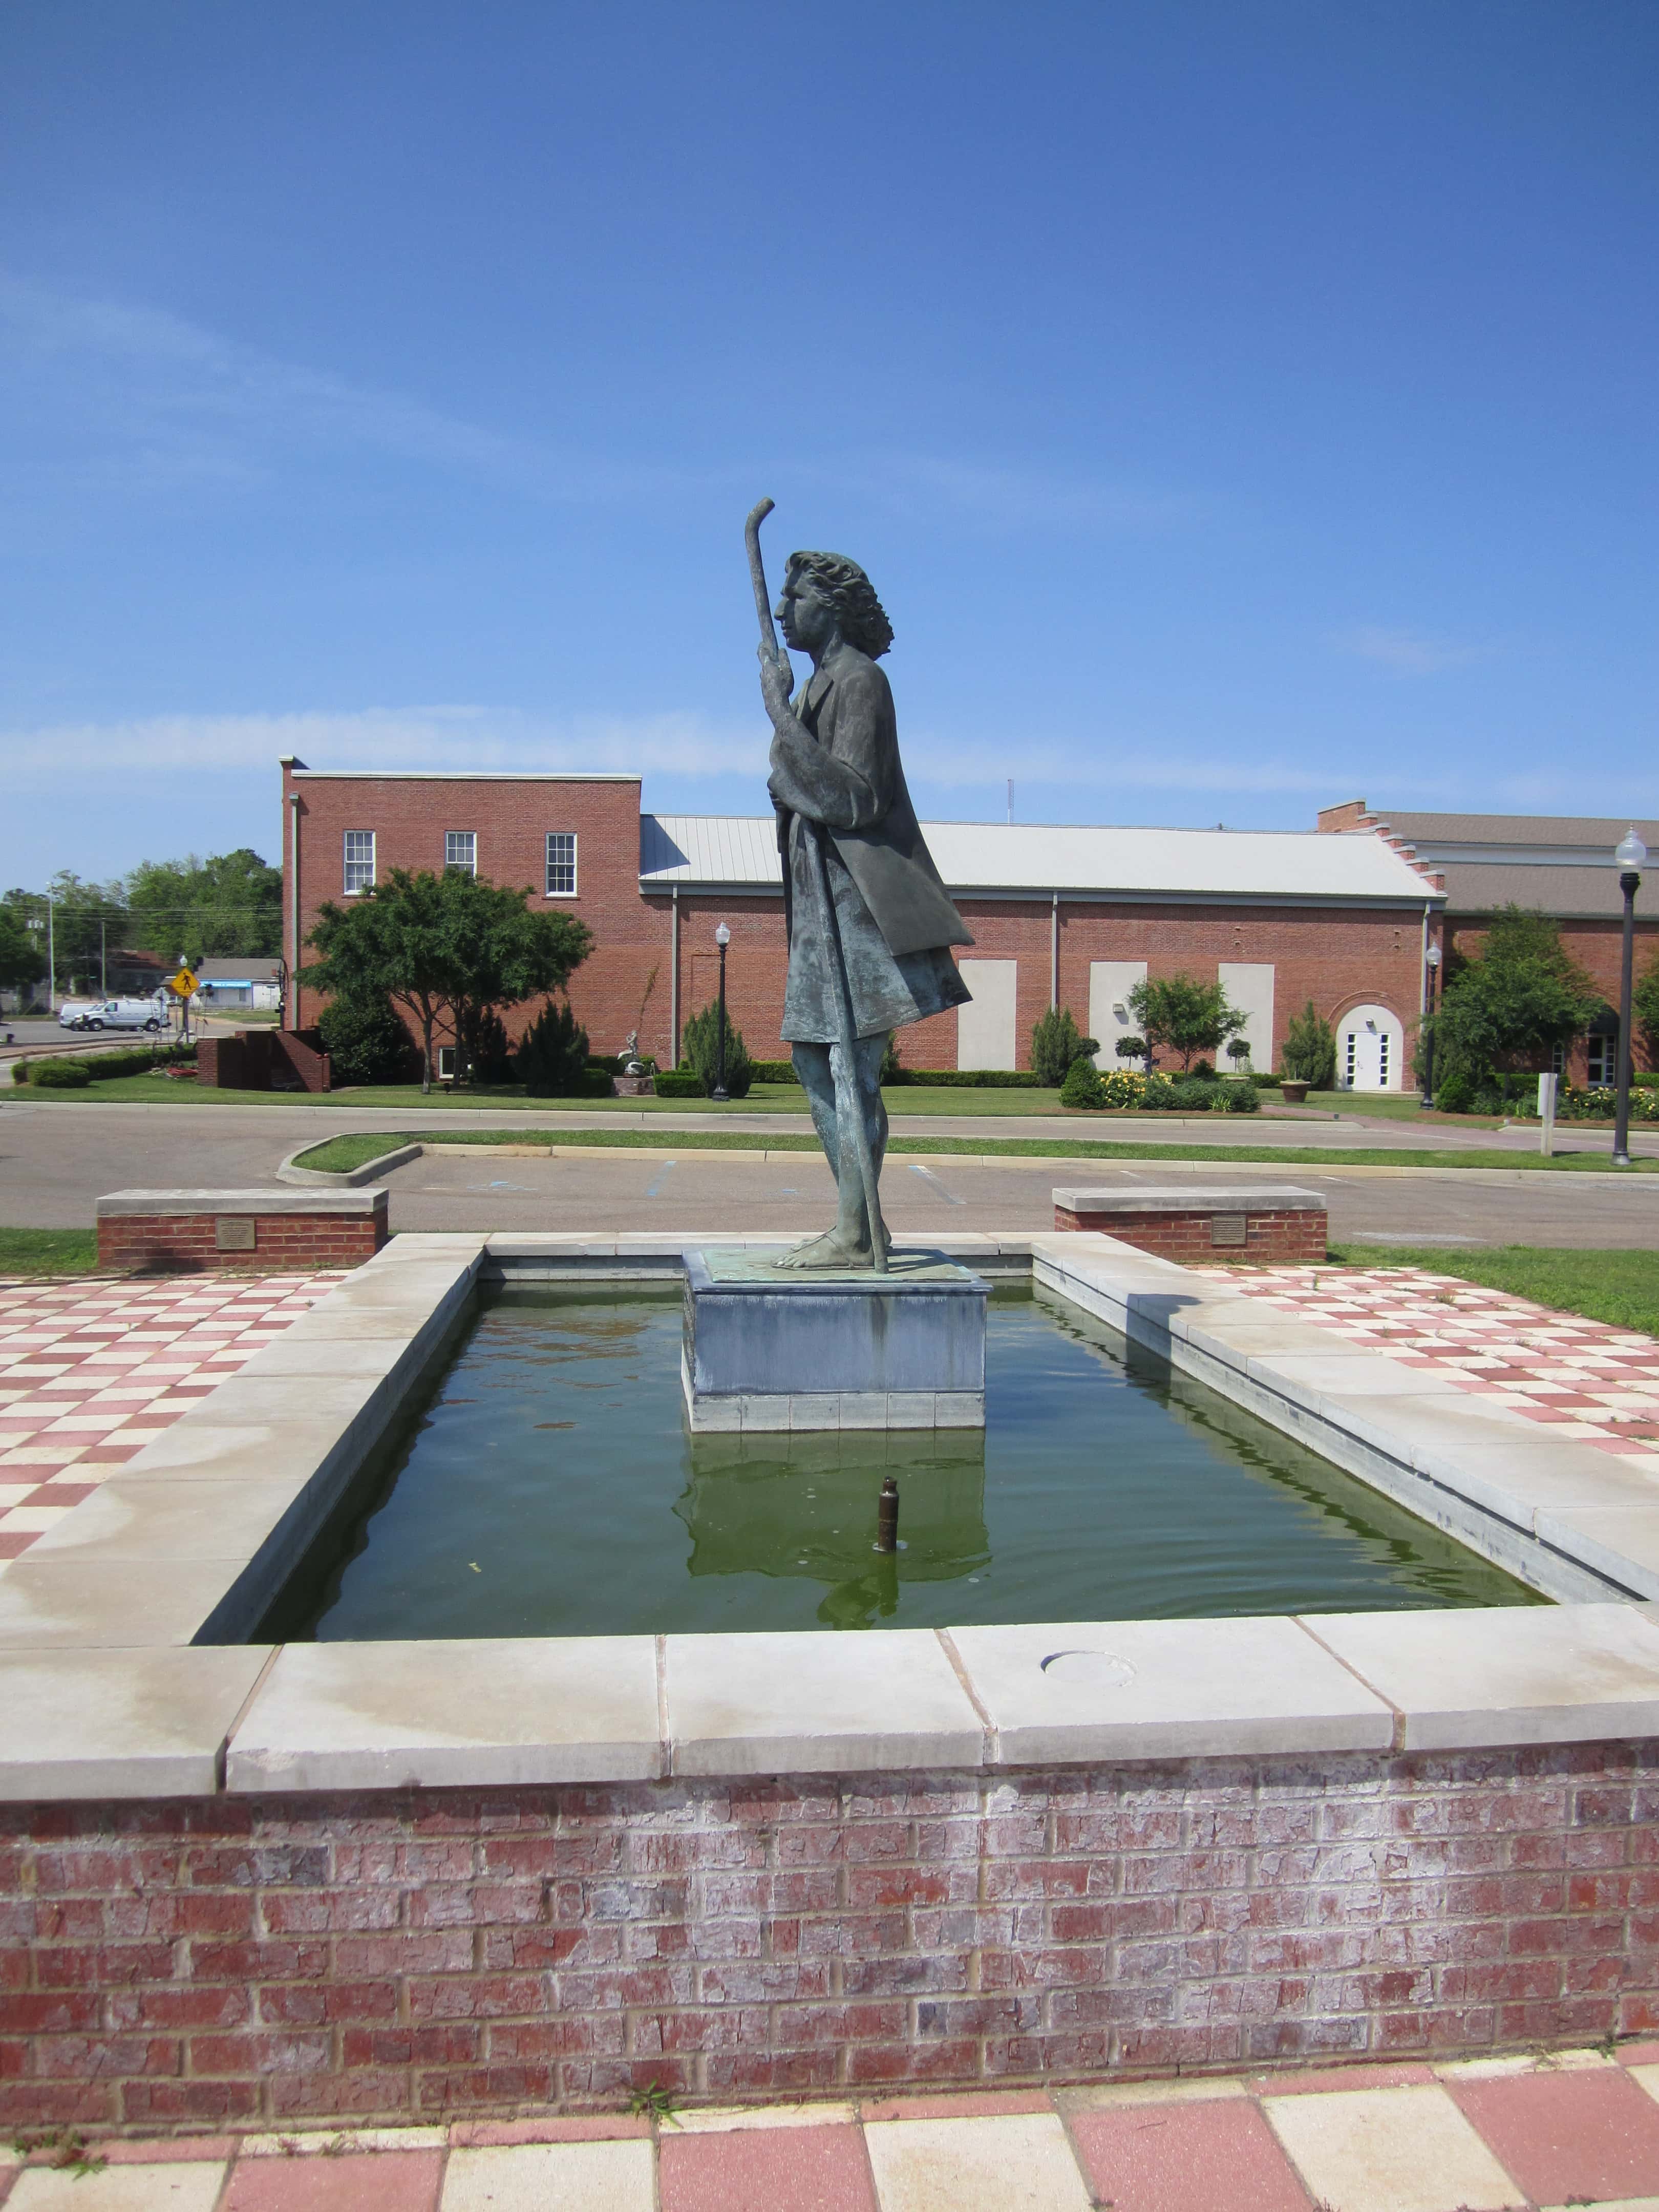 Joseph statue in Dothan, Alabama